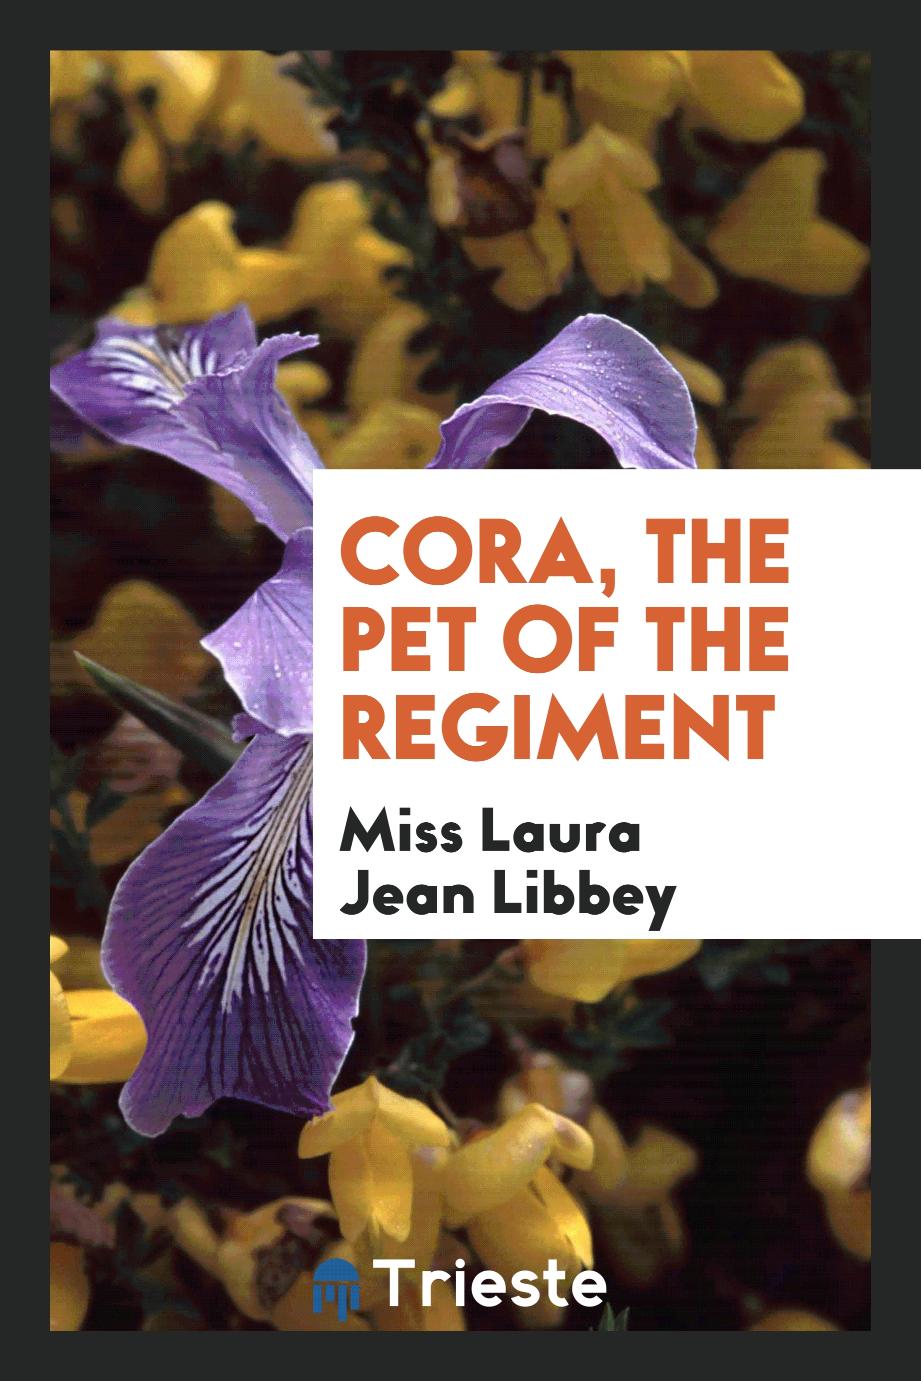 Cora, the pet of the regiment